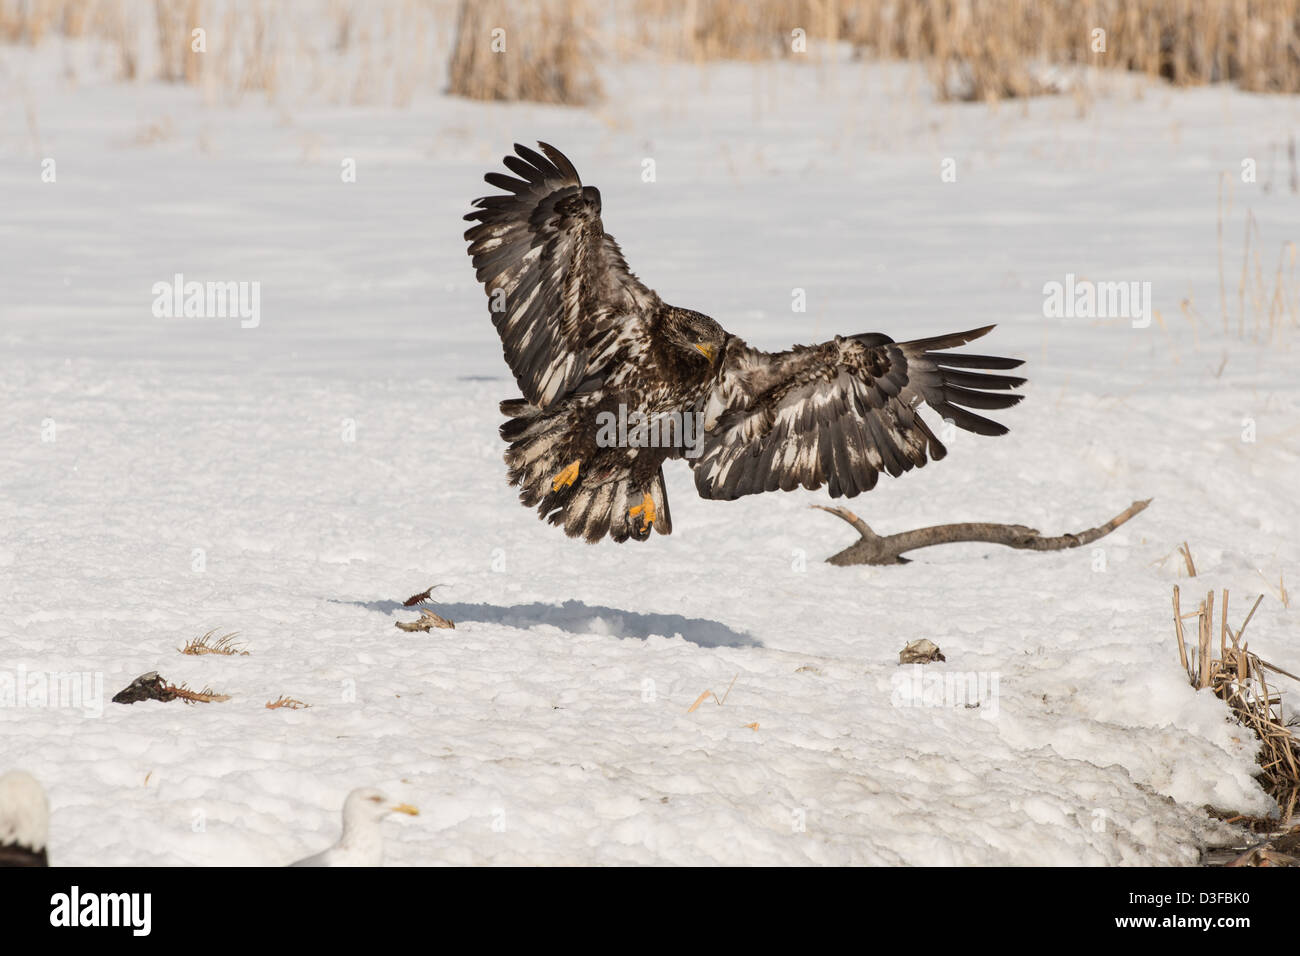 Stock photo of a juvenile bald eagle landing on snow. Stock Photo